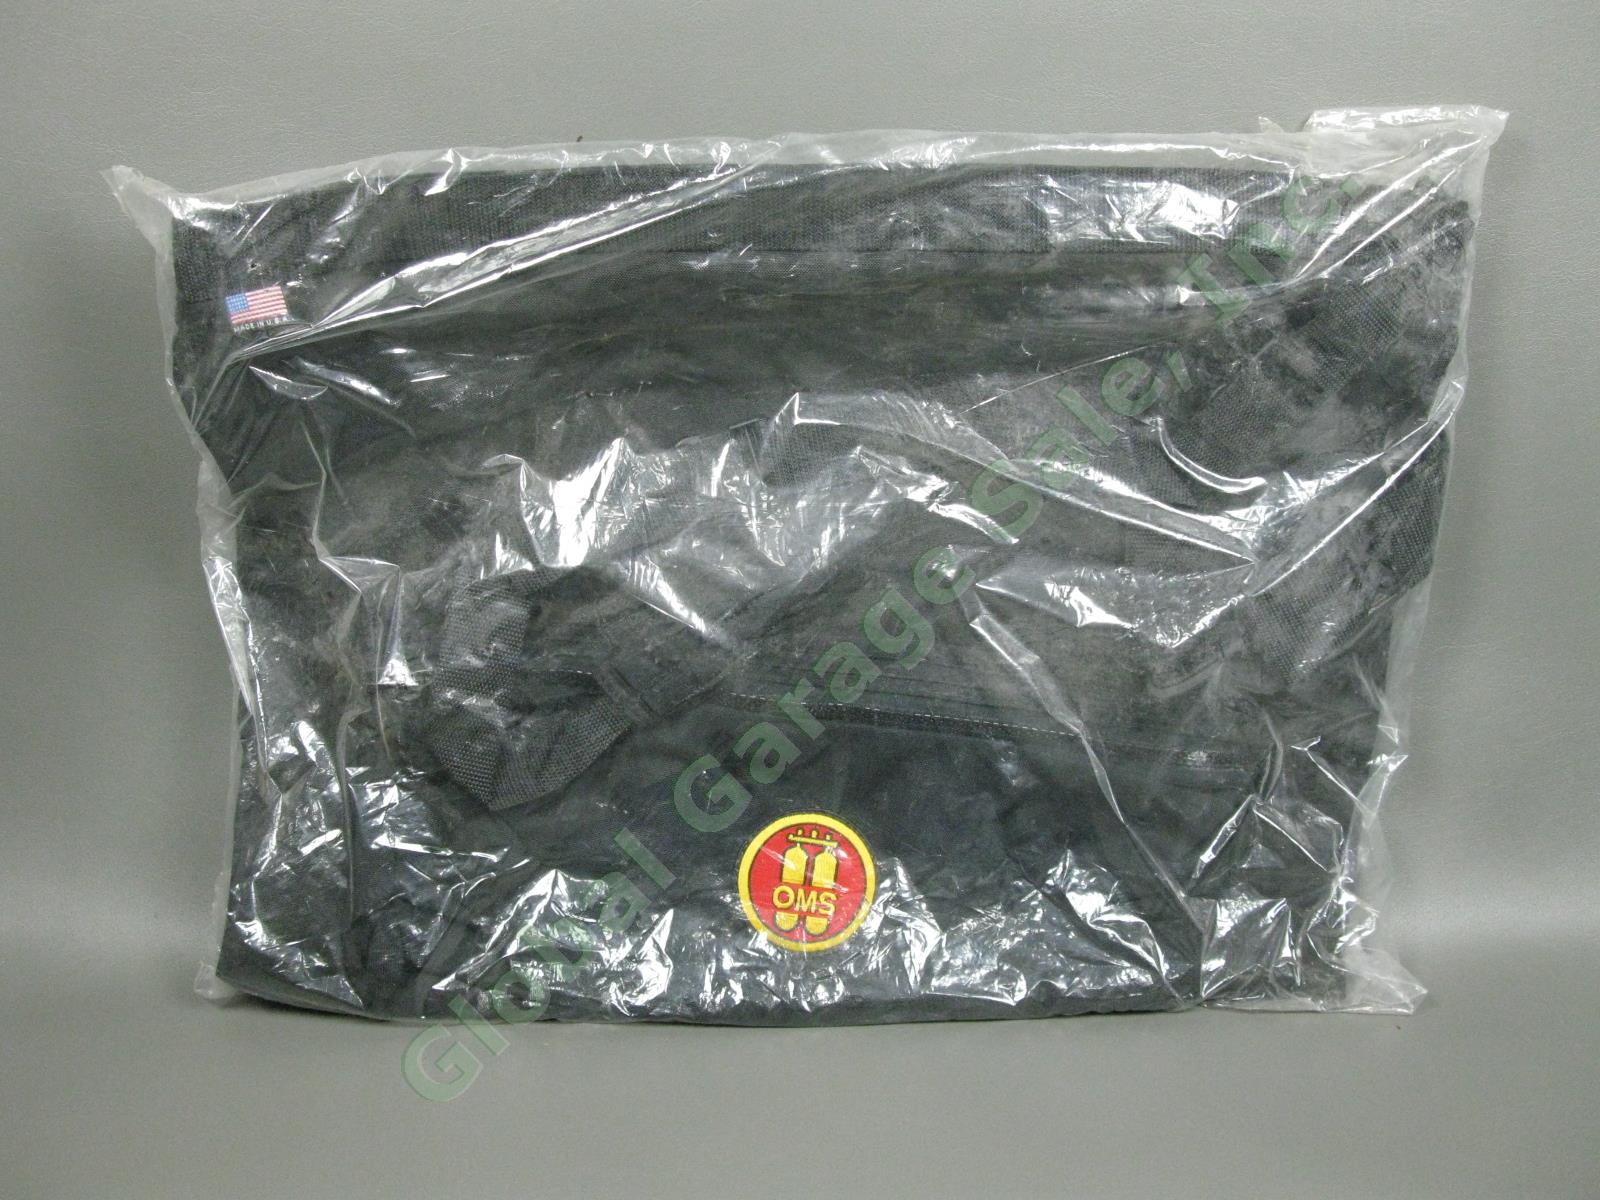 MINT OMS BCD Harness Backplate 45lb Wing Dual Bladder Dive Bag Scuba Lot Sz S/XS 16